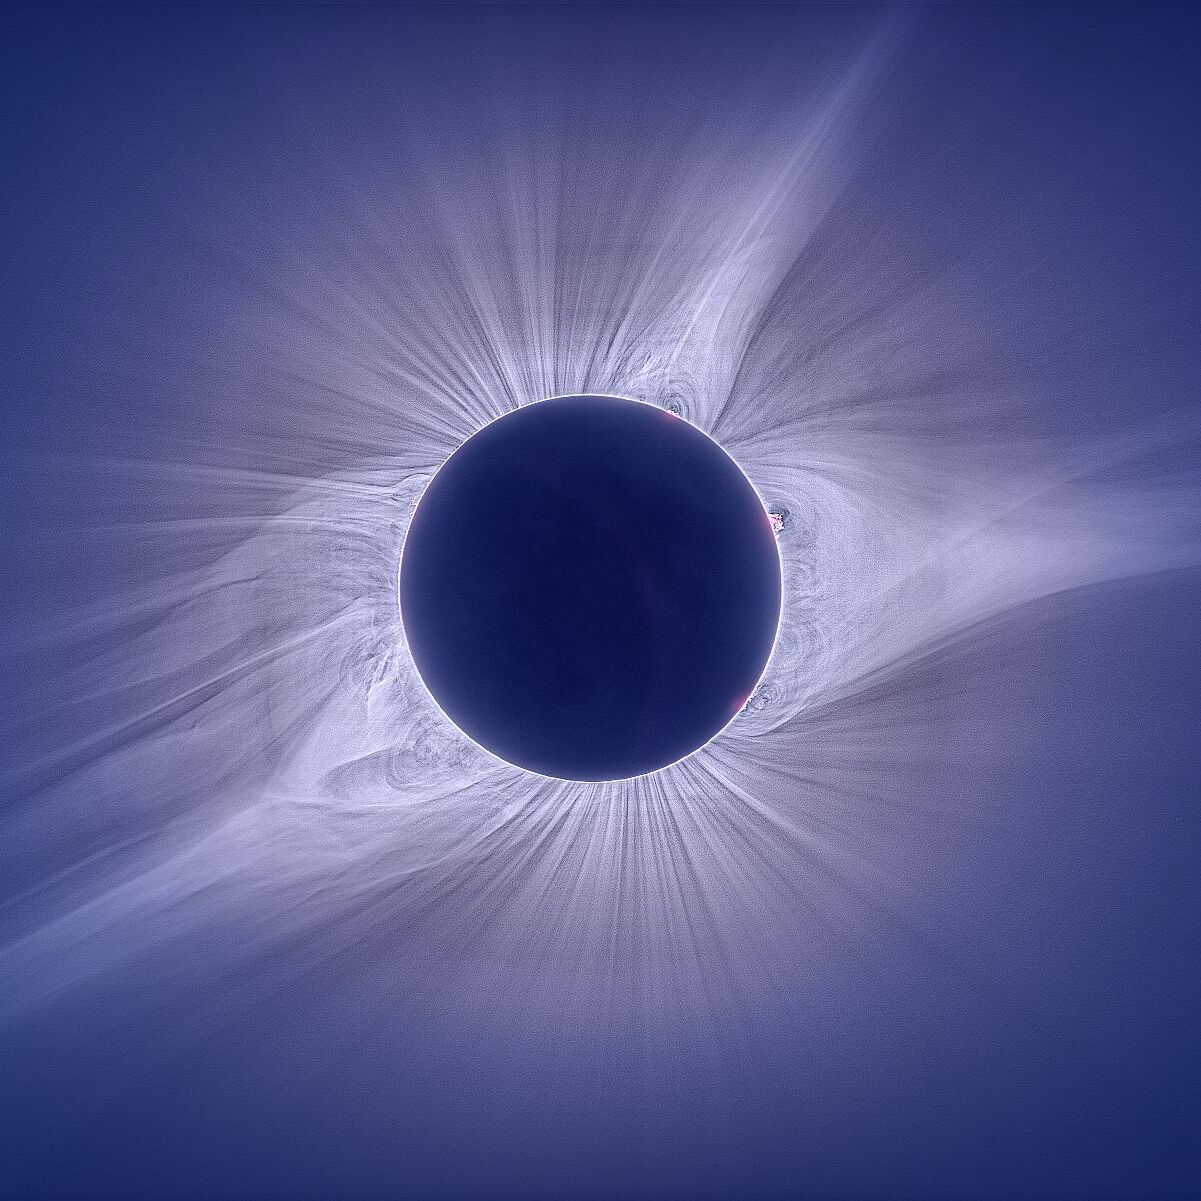 Eclipse Megamovie